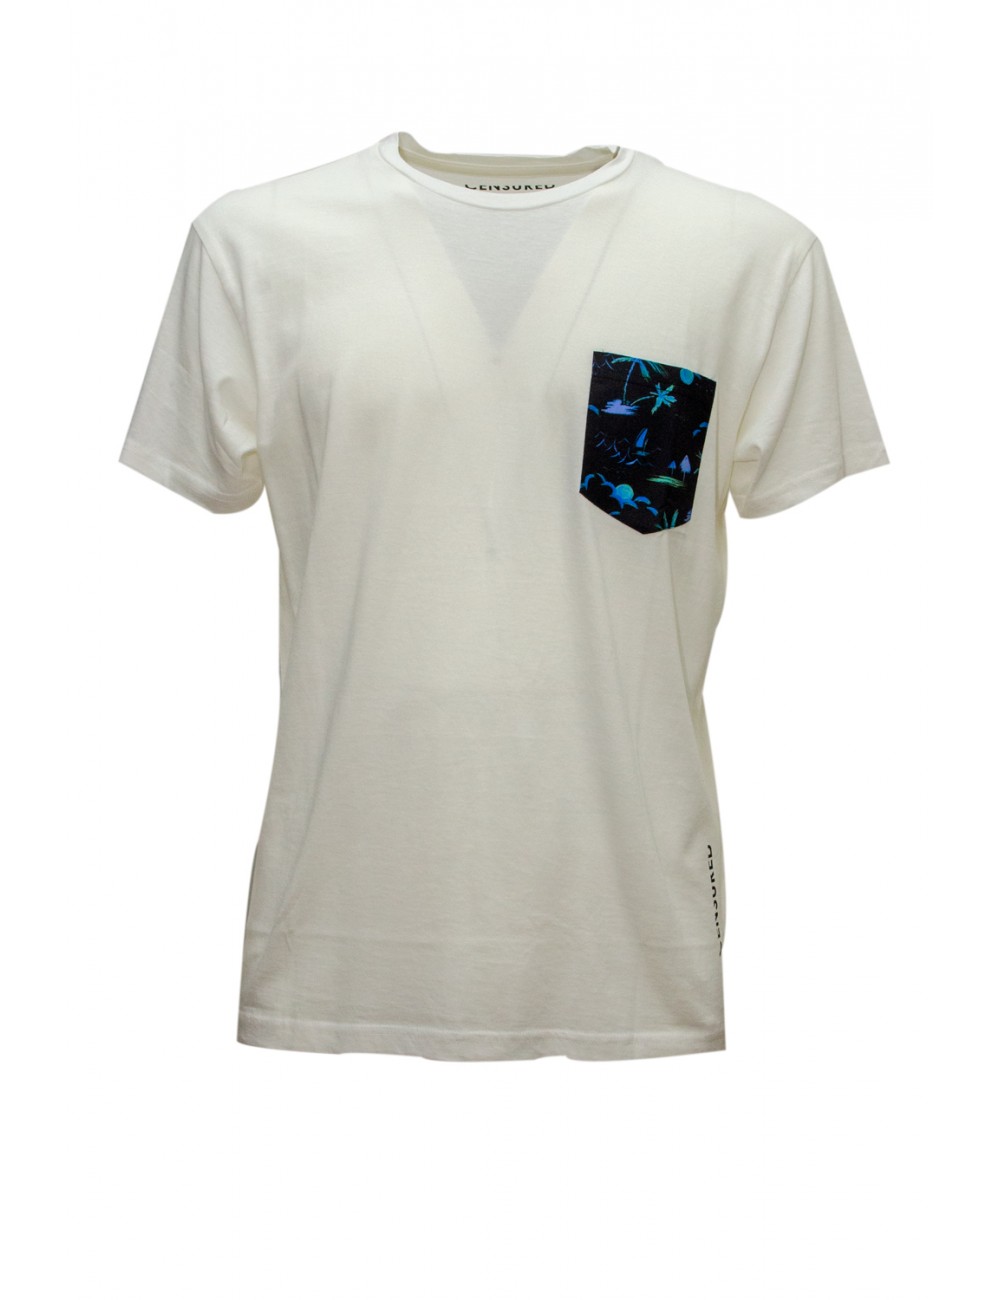 t-shirt censured UOMO BIANCA OFF WHITE - TM C227 T JSEL 01 vista frontale